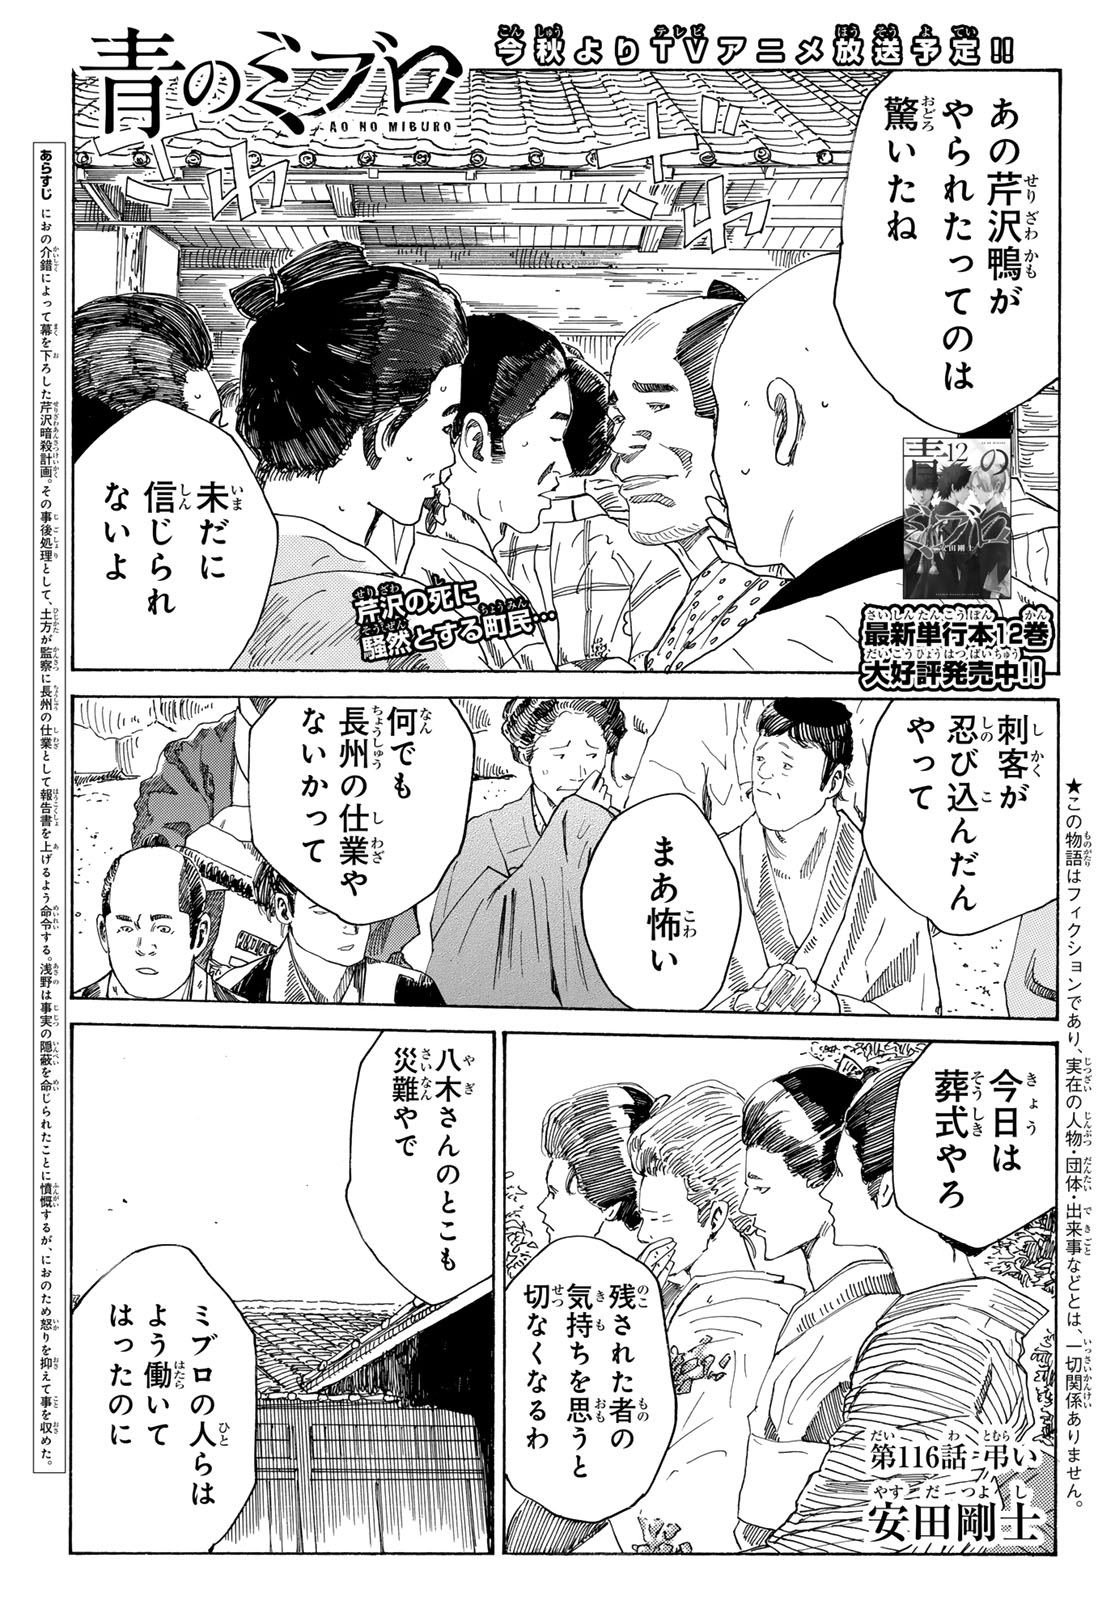 Ao no Miburo - Chapter 116 - Page 1